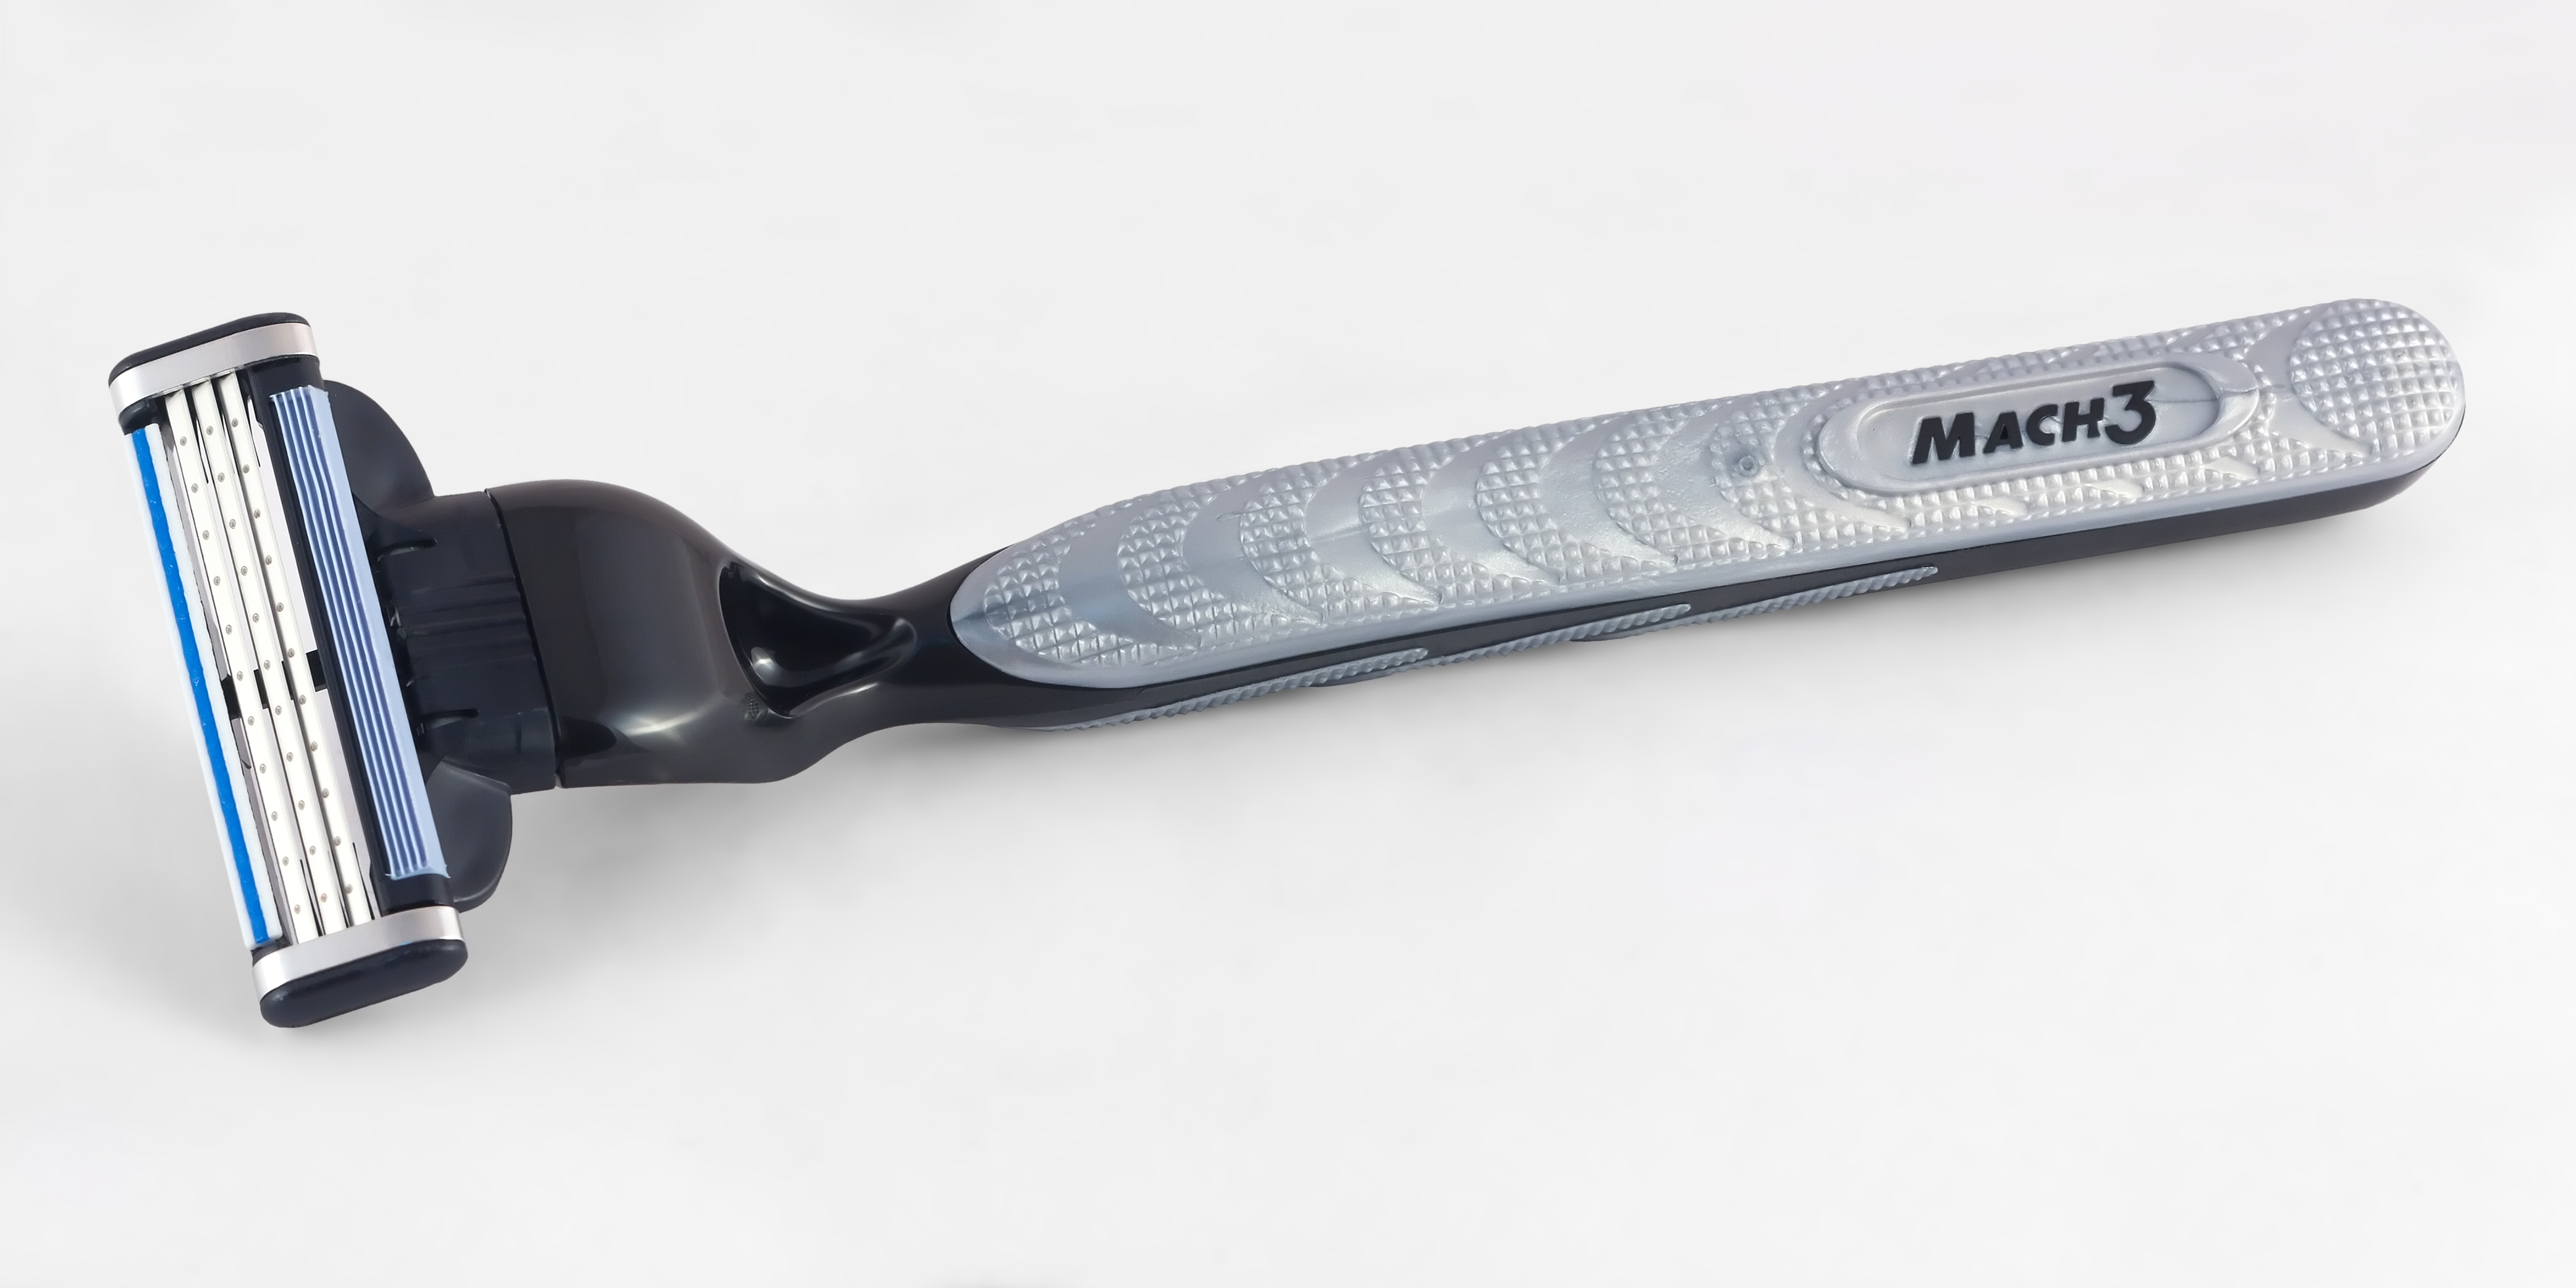 Gillette Mach3 razor from Indonesia, 2015-08-03